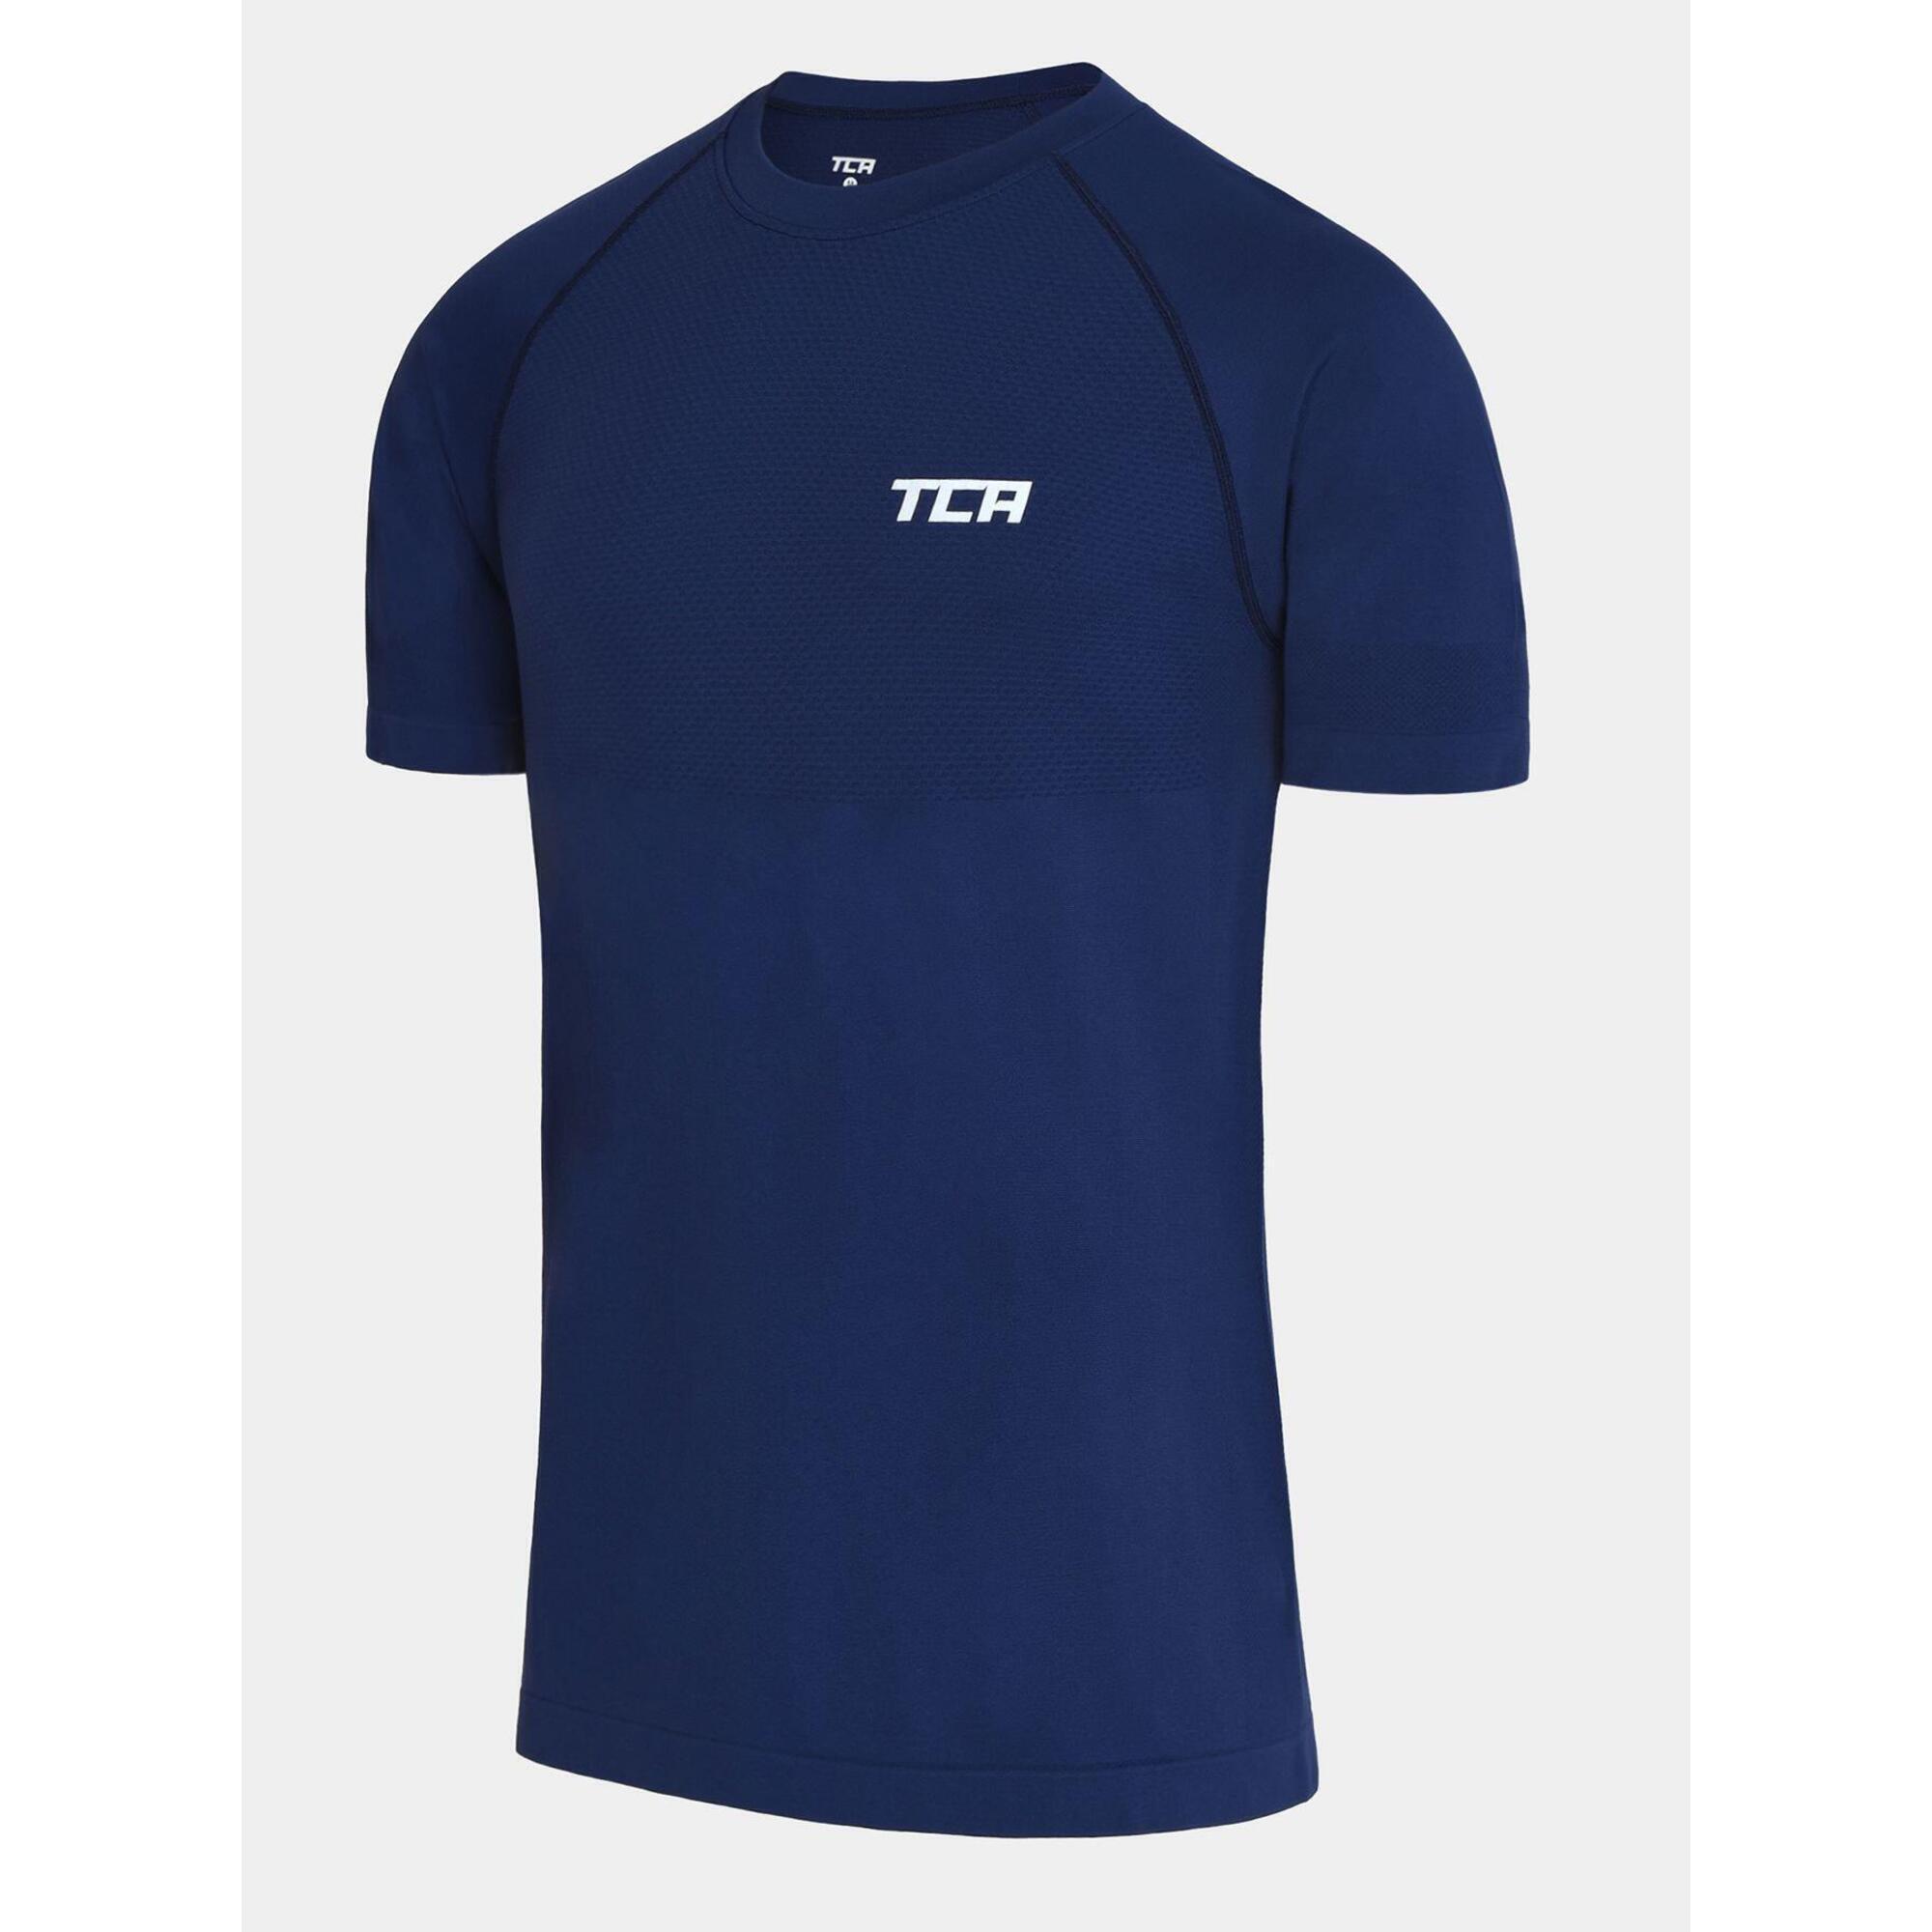 TCA Men's Superknit Breathable Running Gym T-Shirt - Blueprint